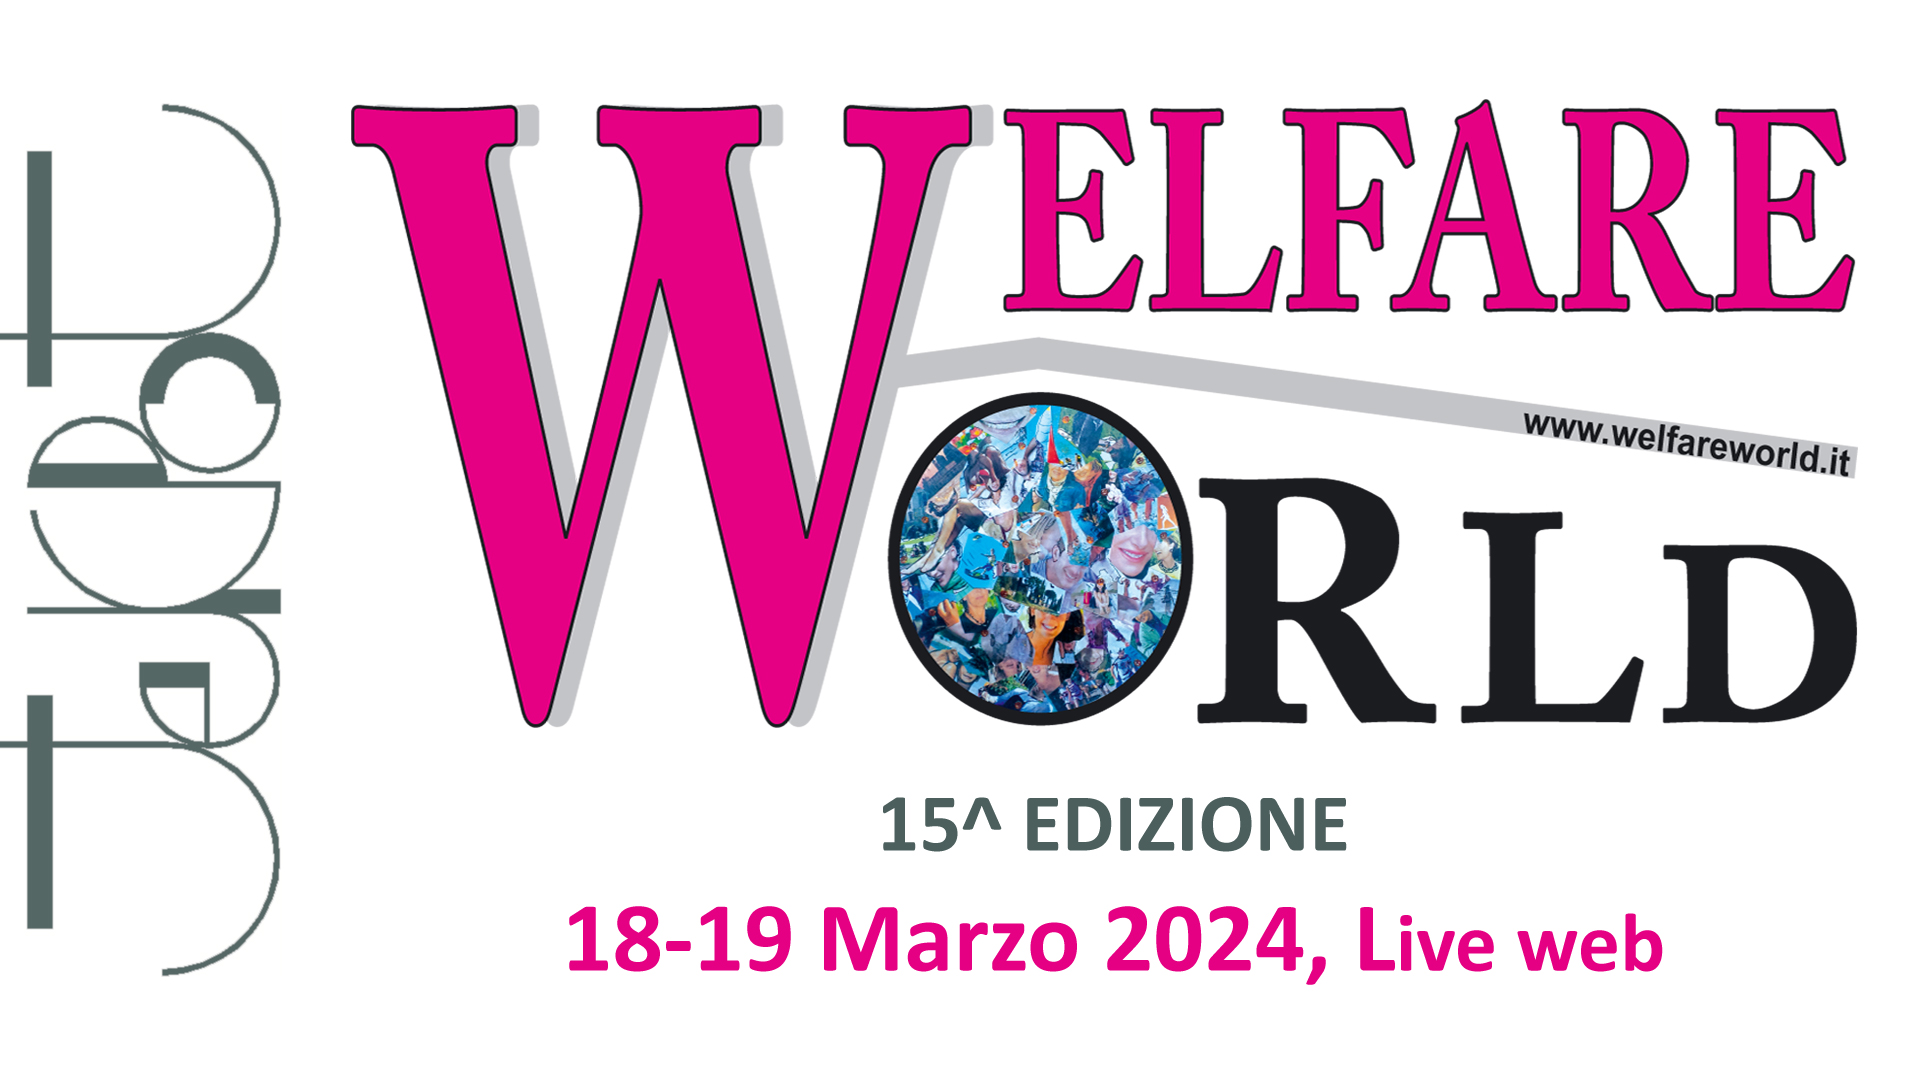 15° WELFARE WORLD (18-19 Marzo 2024, Live web)